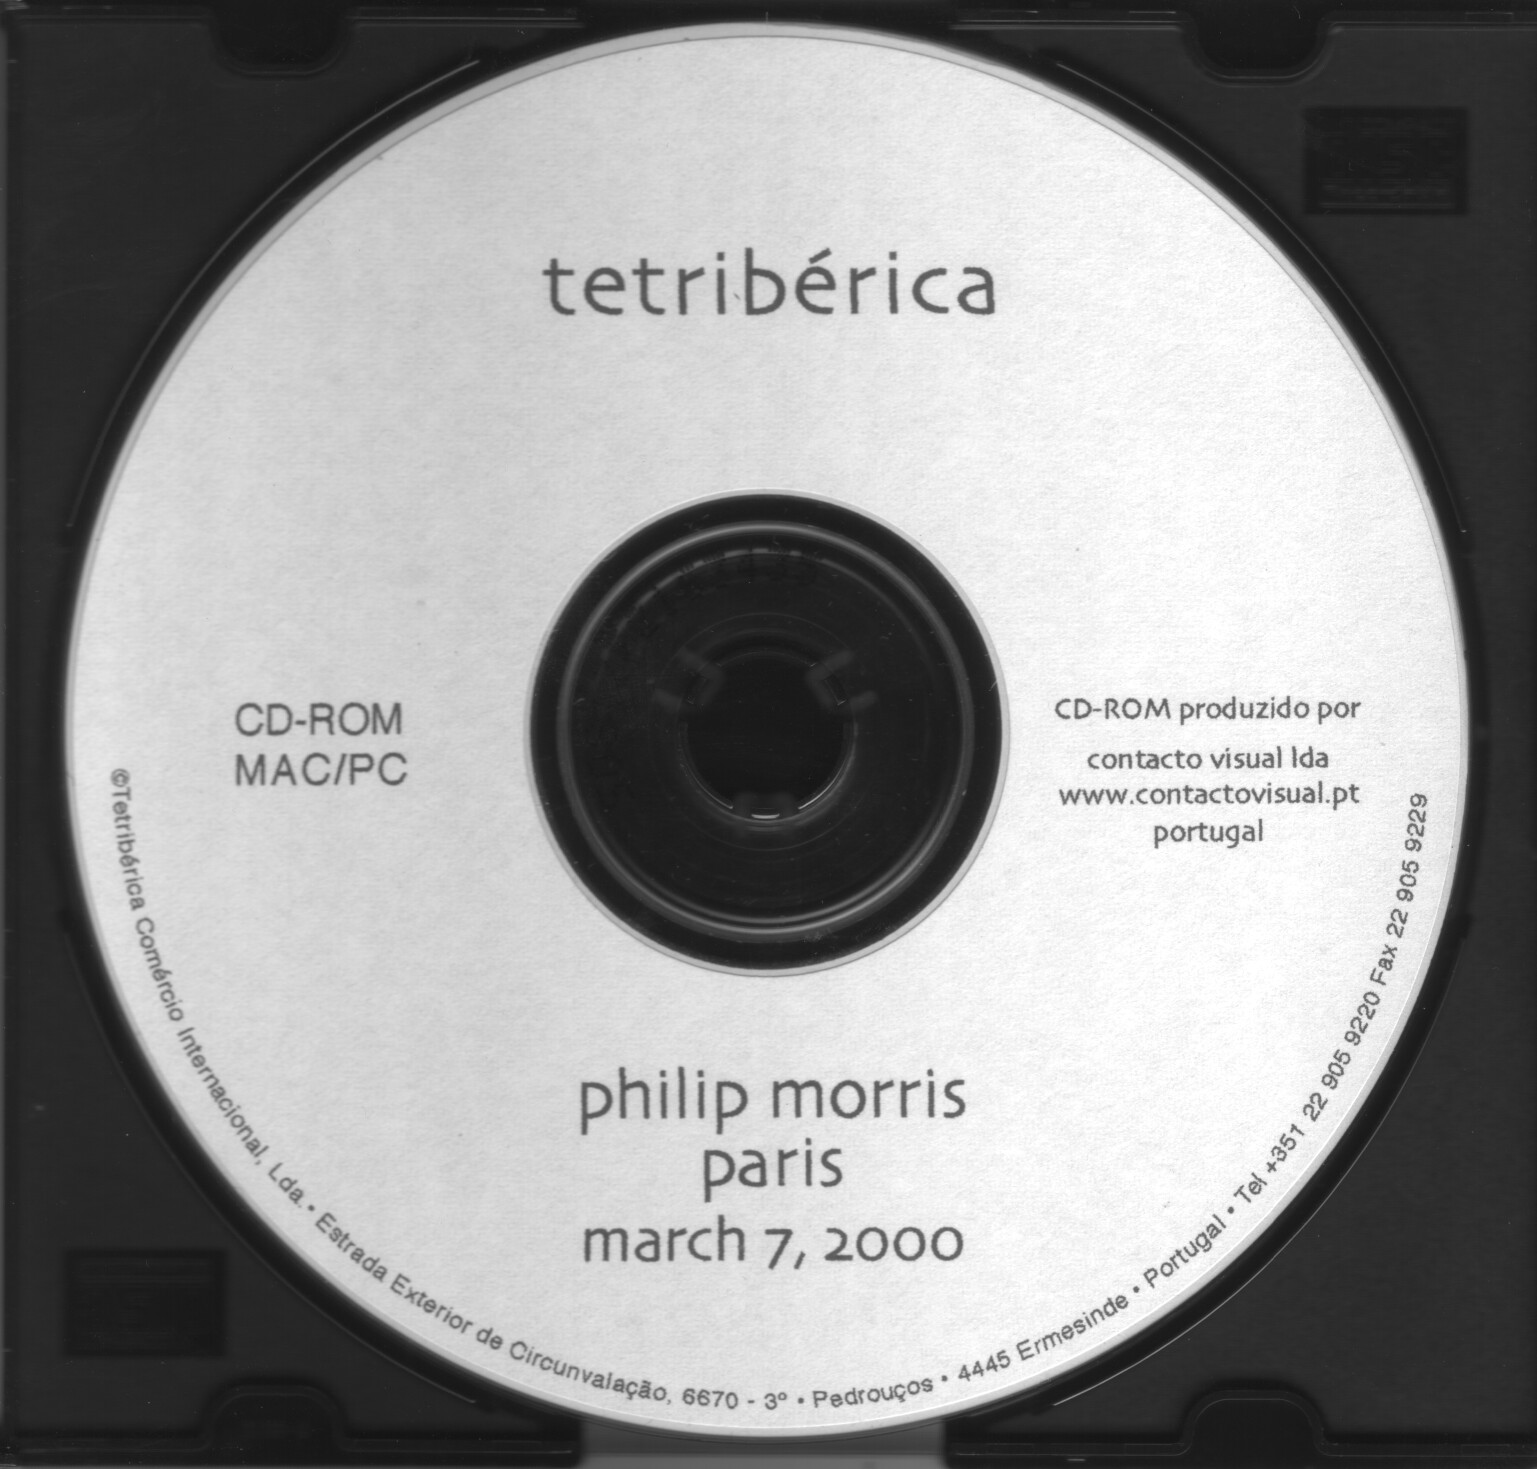 CD-Rom Tetribérica - Philip Morris